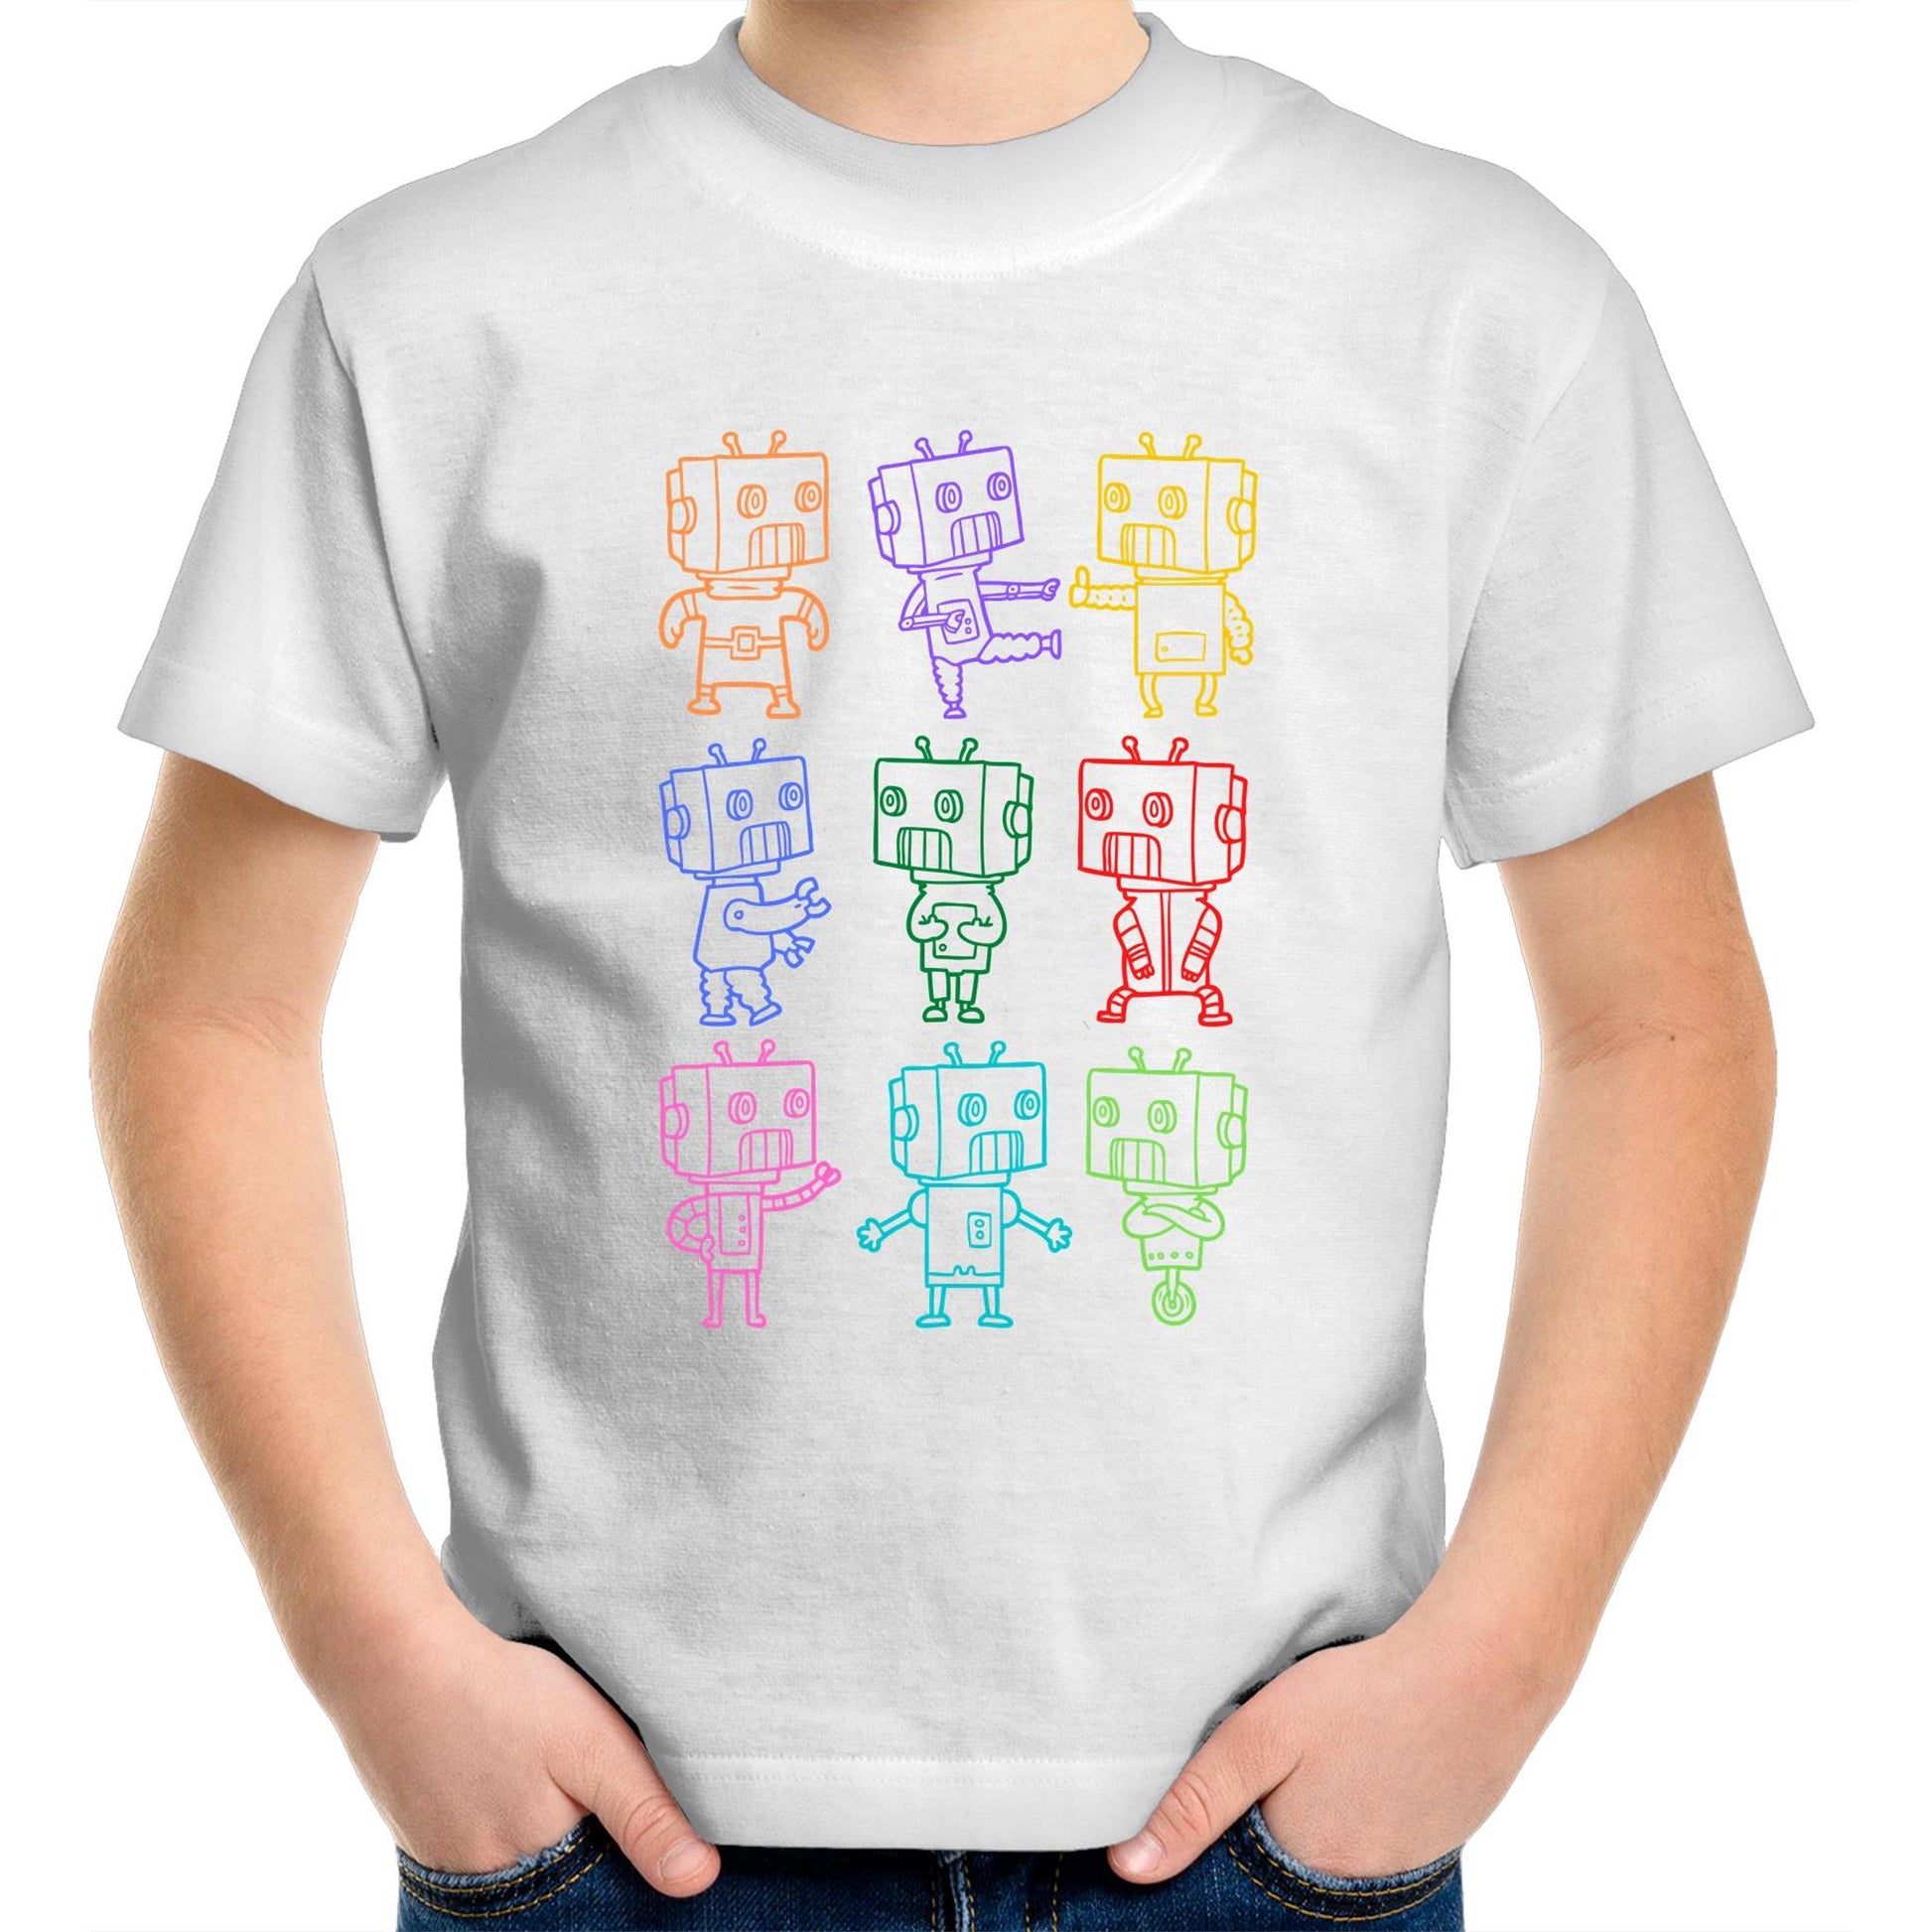 Robots - Kids Youth Crew T-Shirt White Kids Youth T-shirt